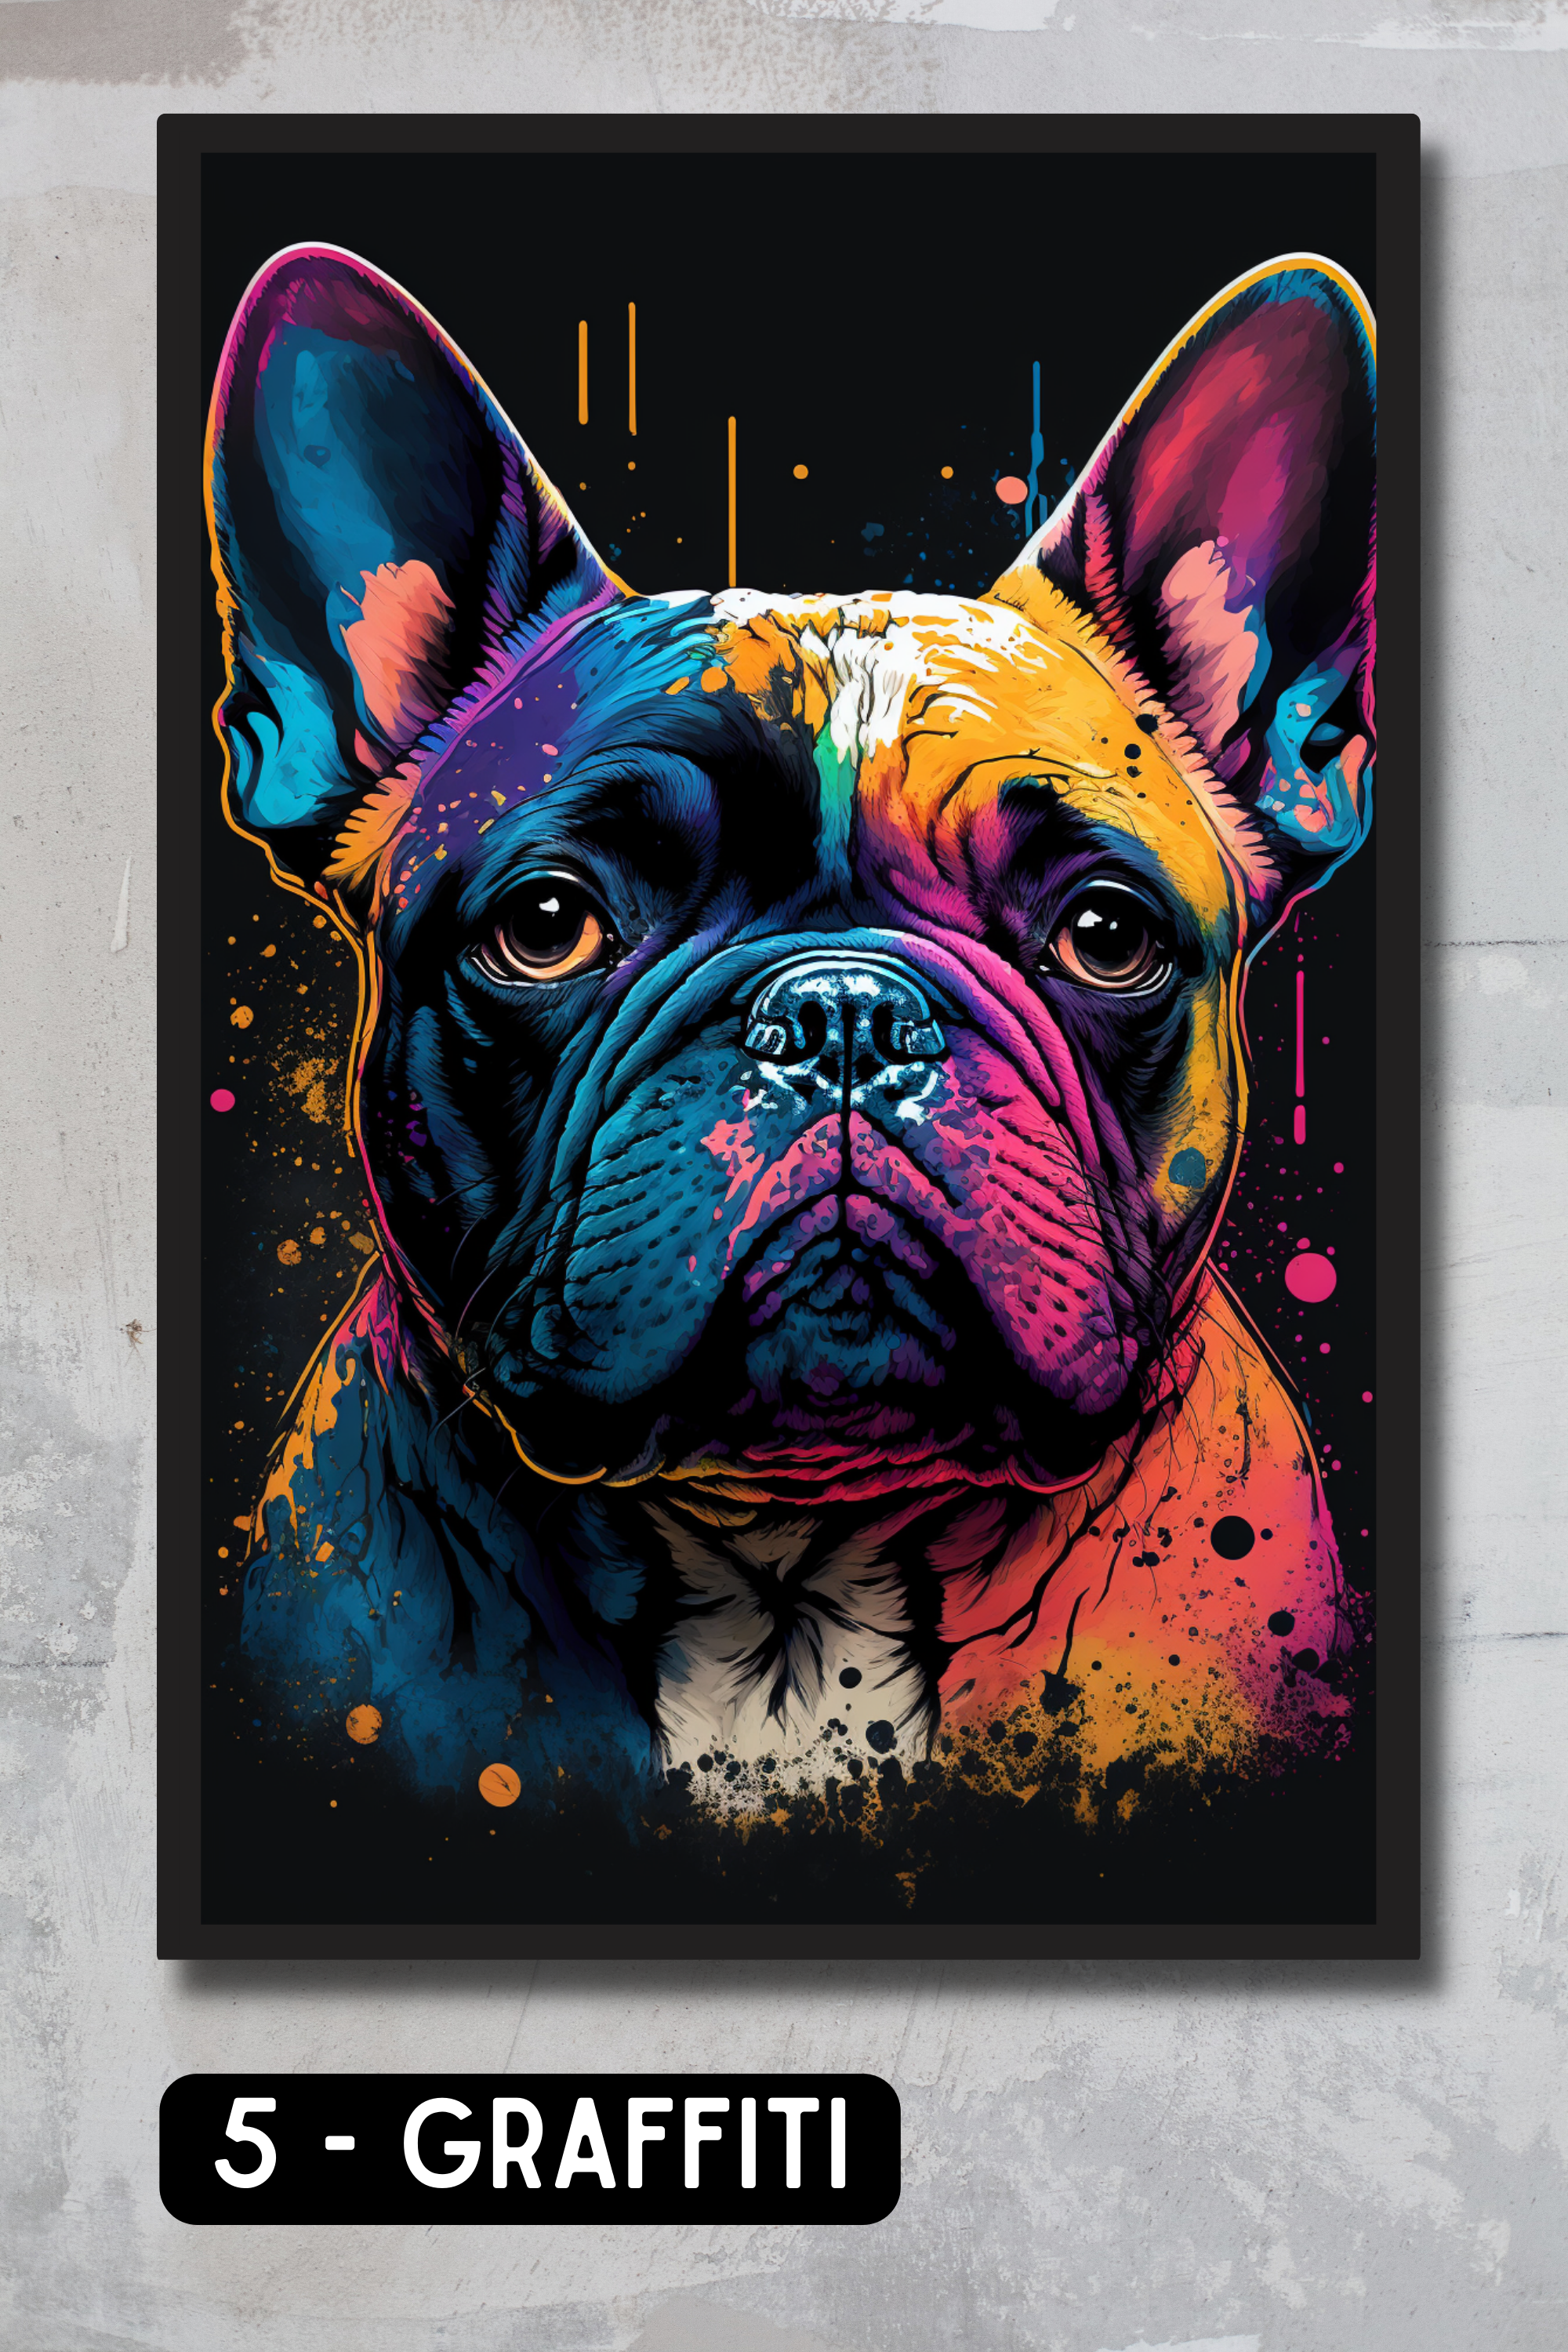 French Bulldog Pet Portrait - Graffiti